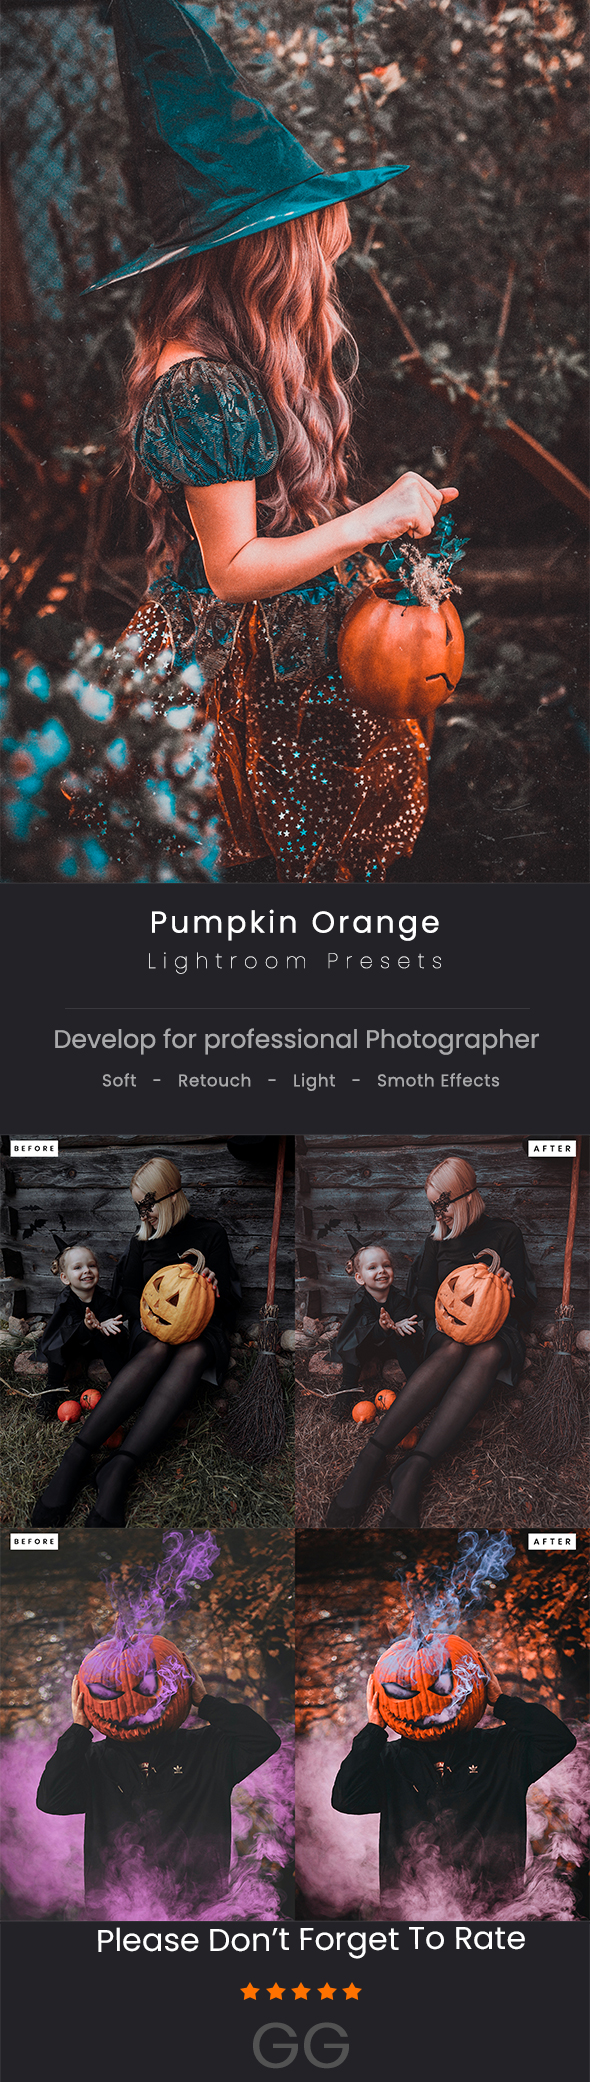 [DOWNLOAD]Pumpkin Orange Lightroom Presets